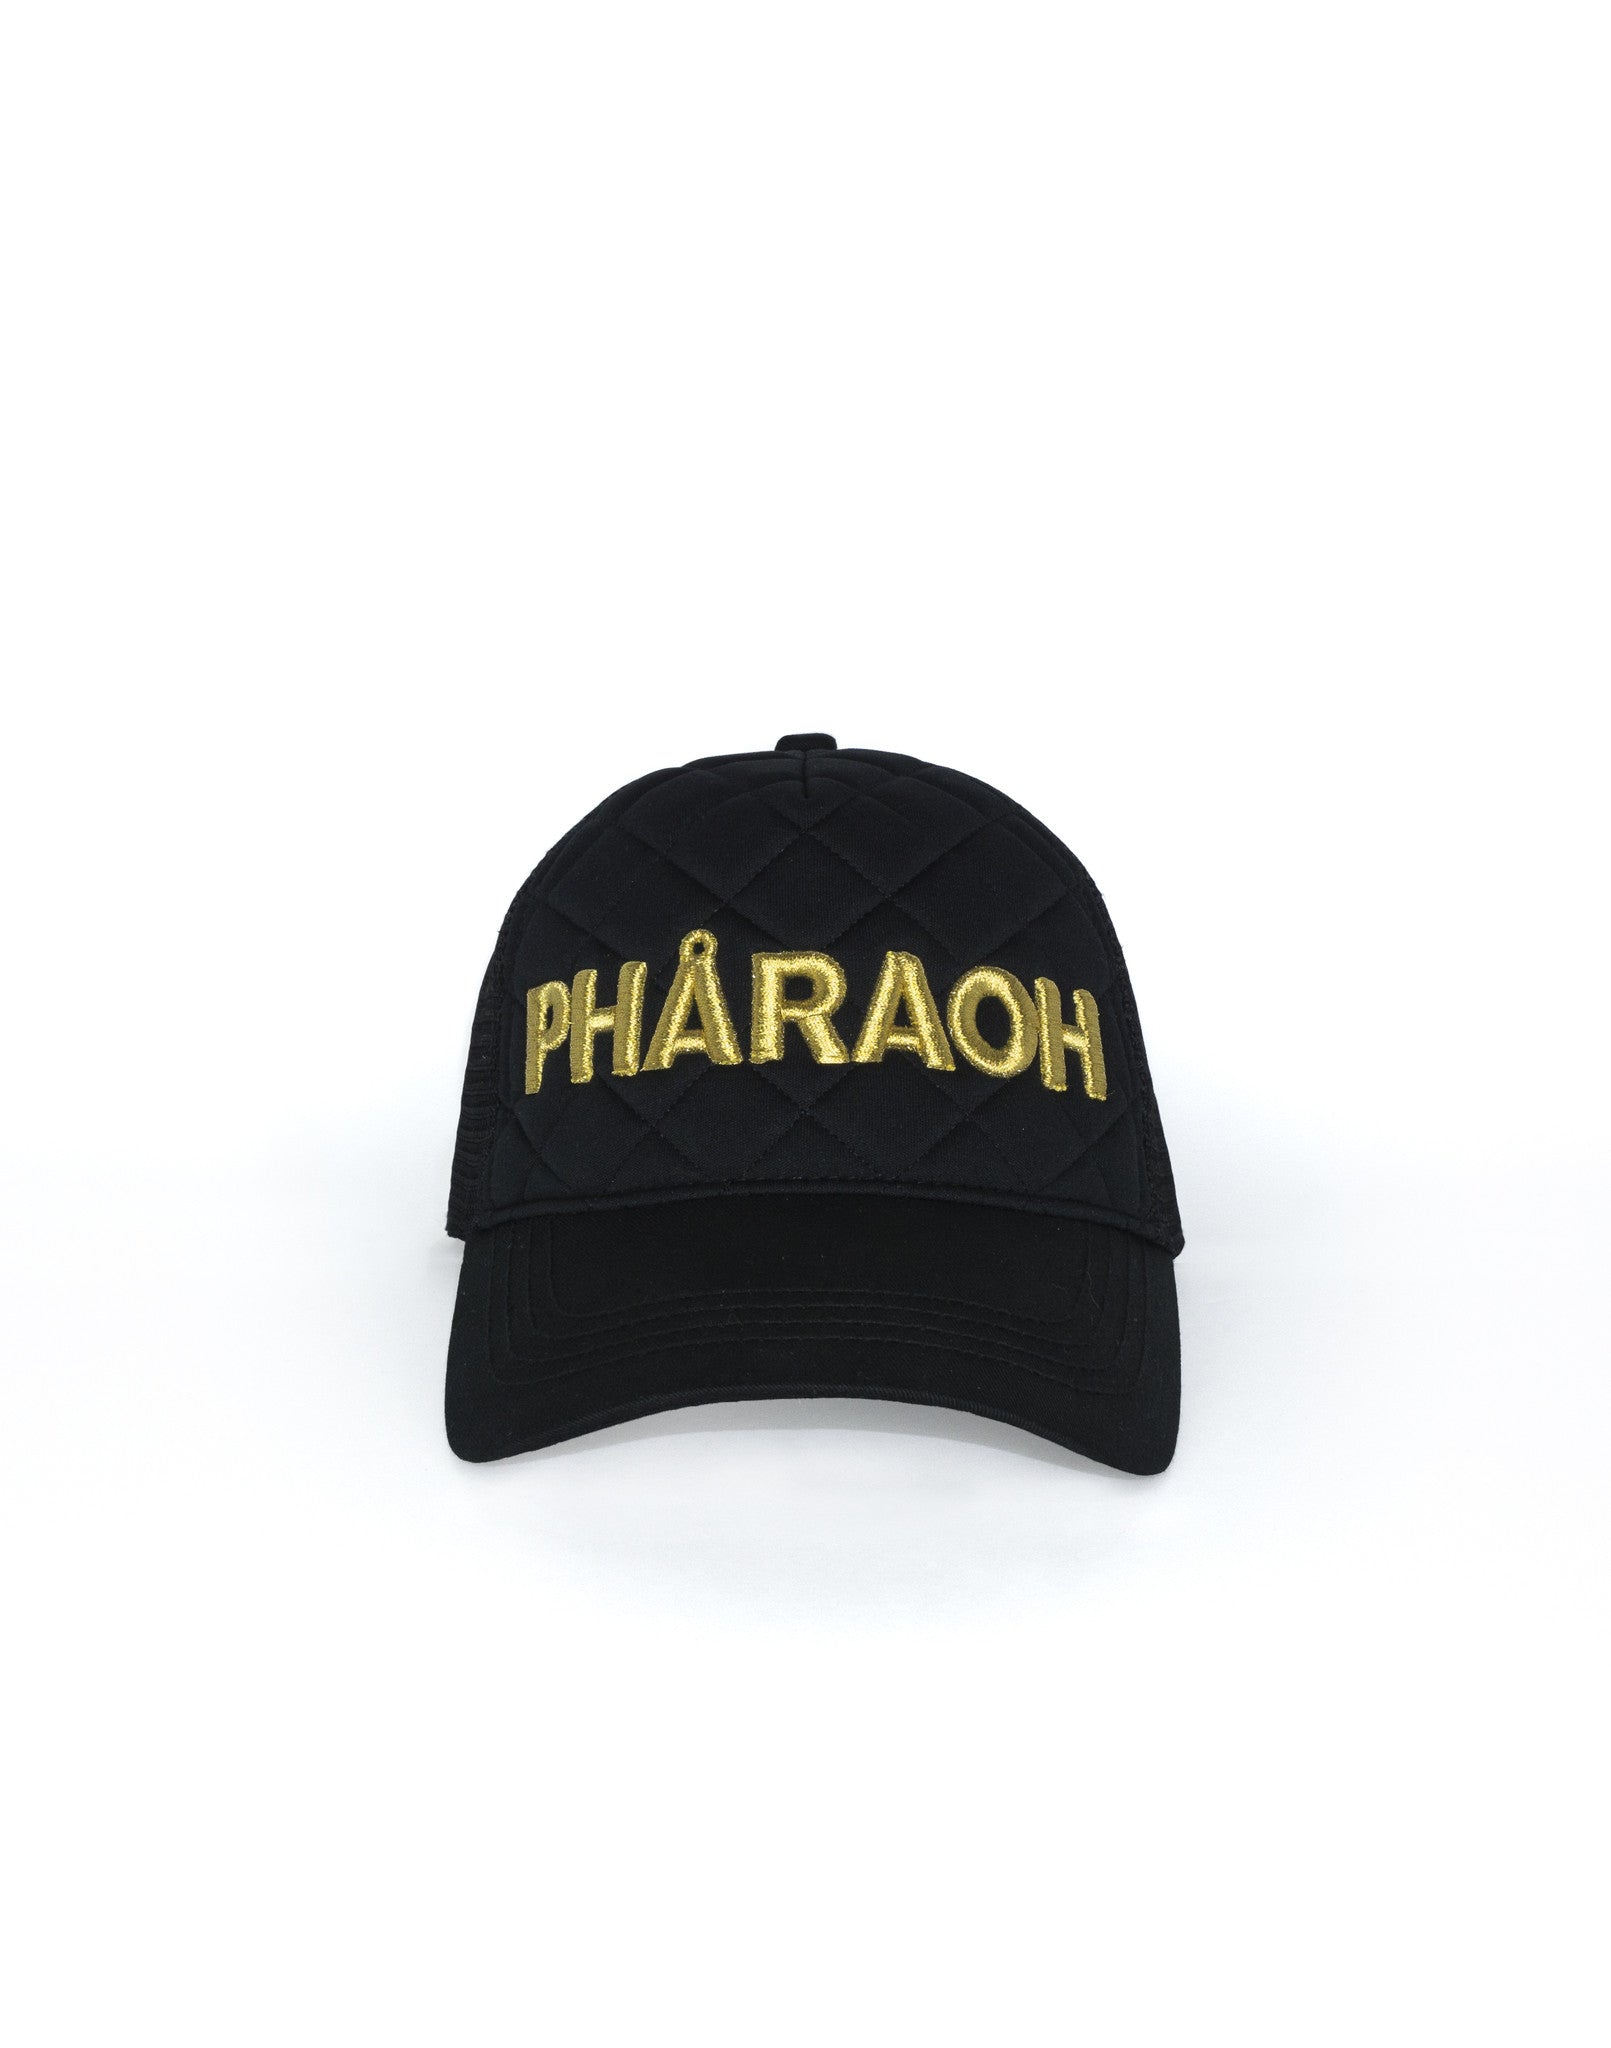 The Royal Pharaoh Head Piece: Gold-Black - Pharaoh Threads